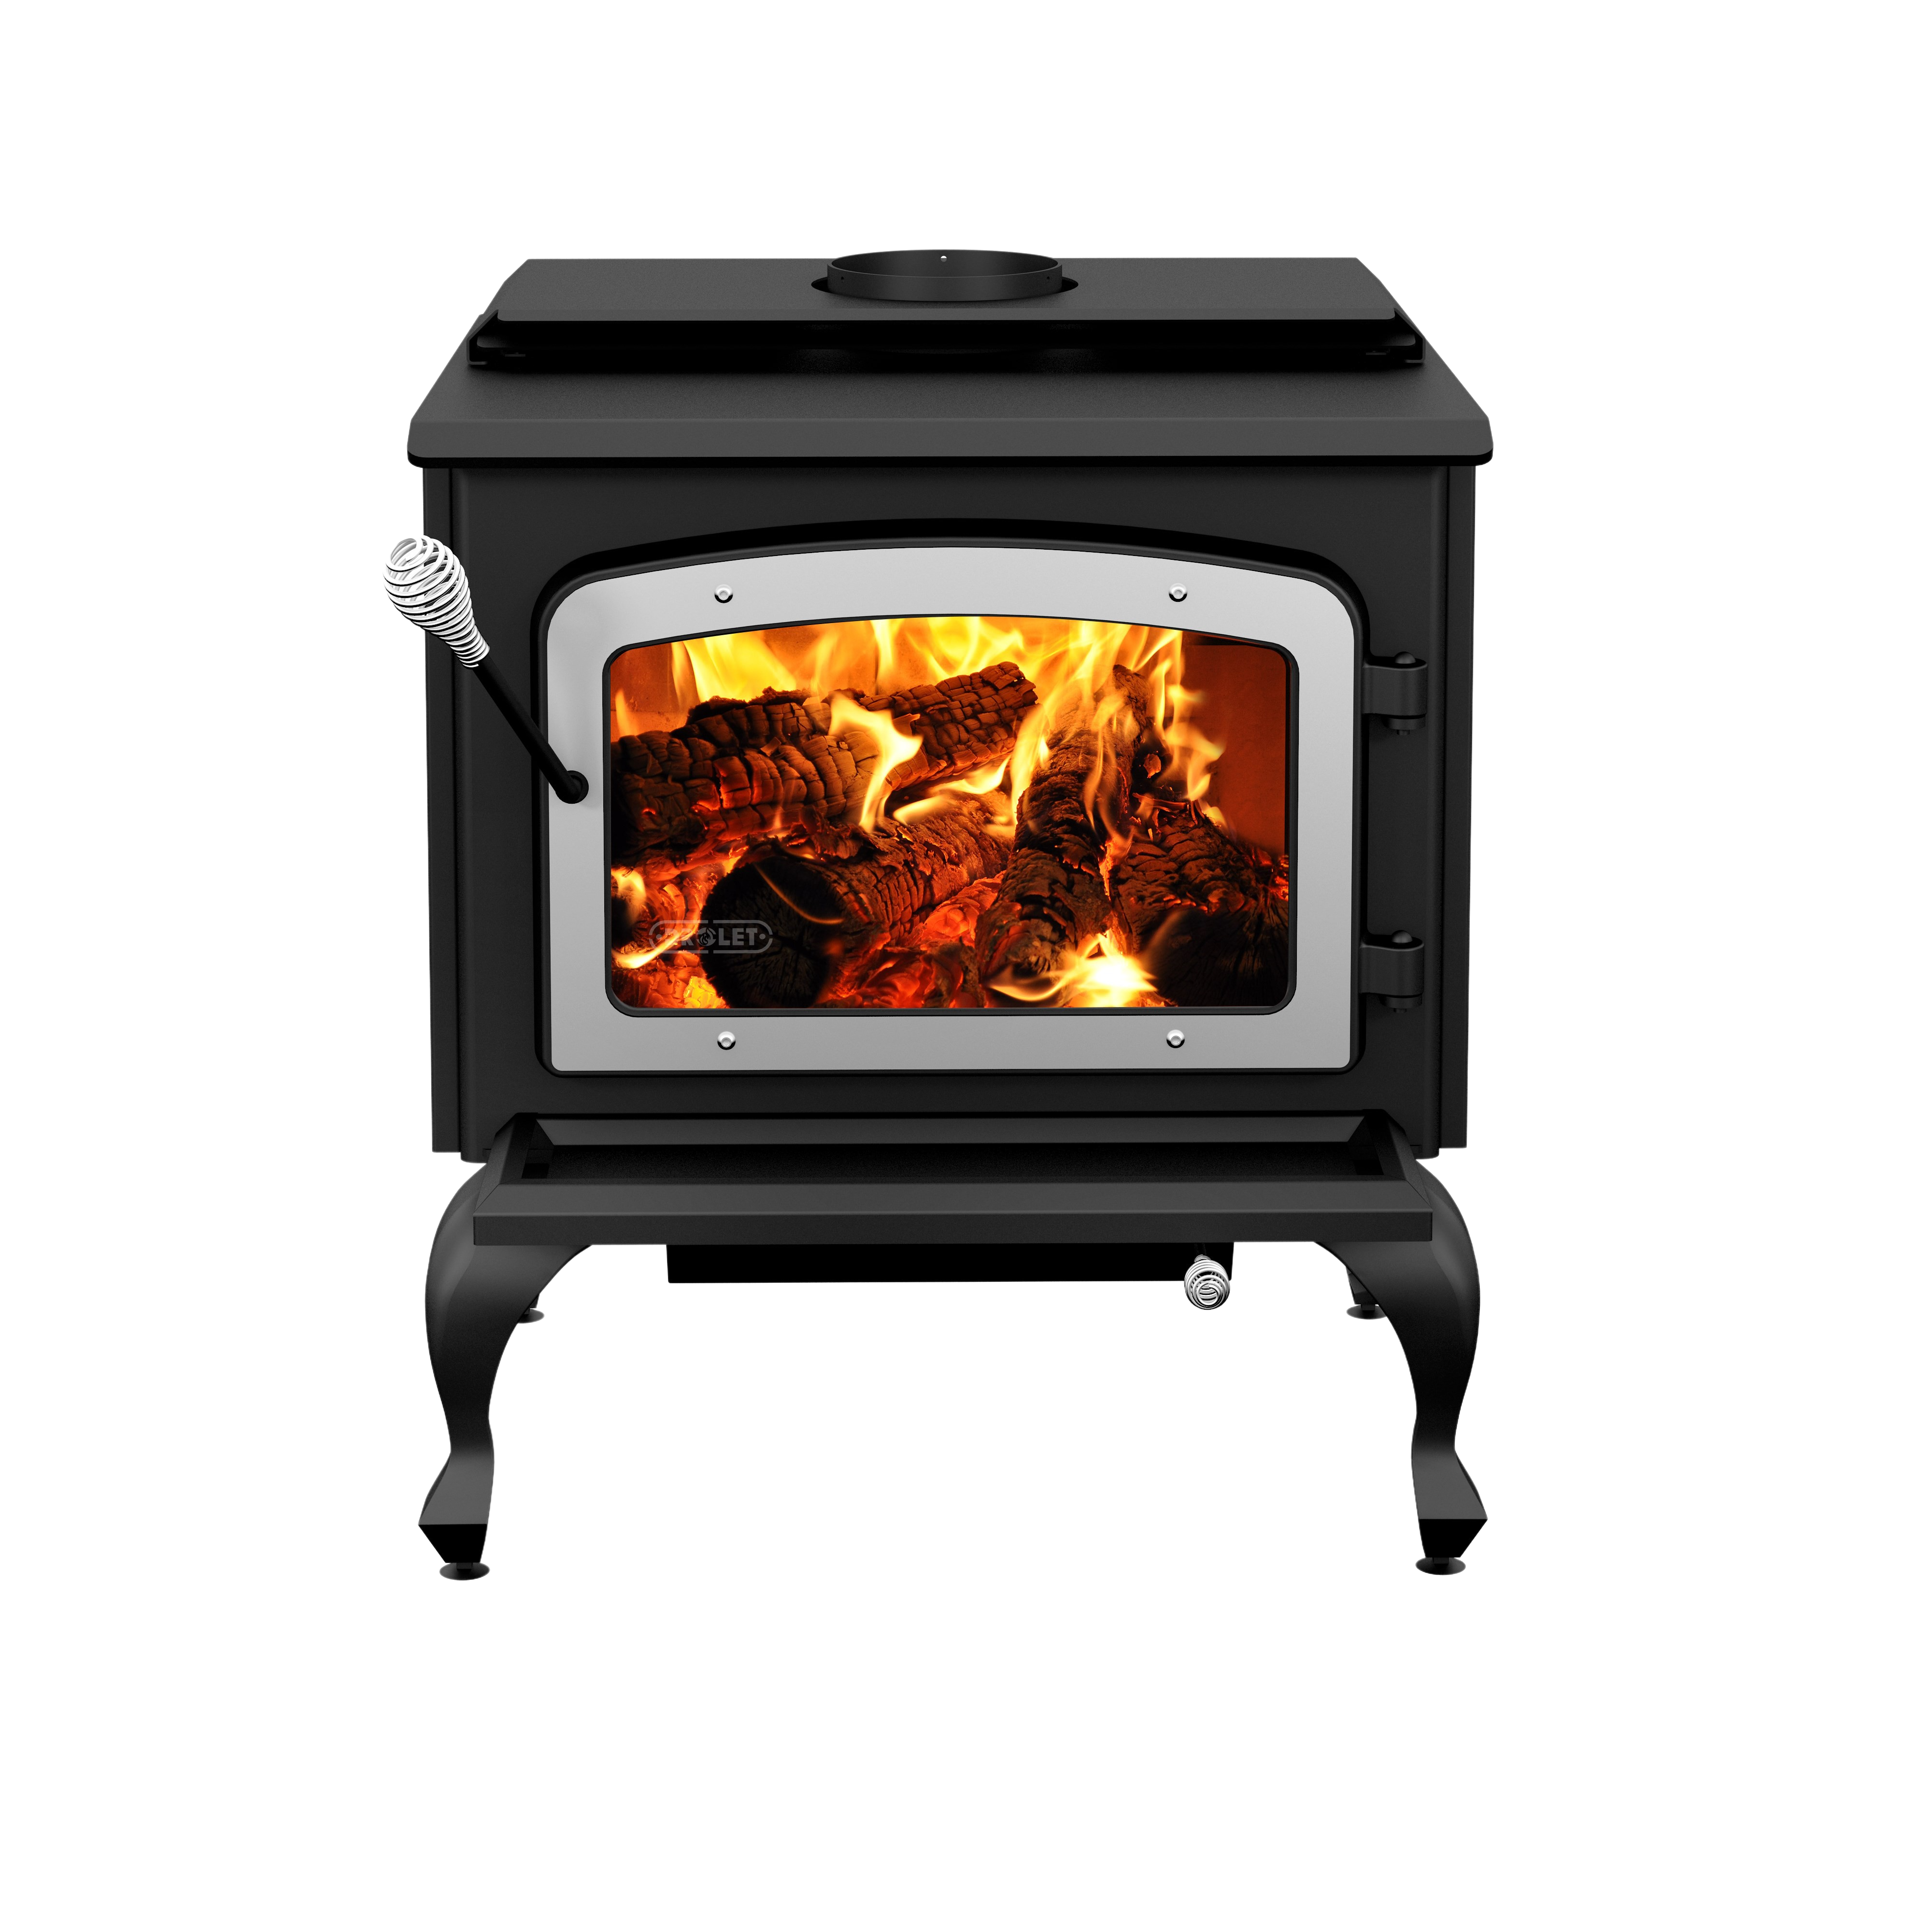 Drolet - Bistro Wood Burning Cookstove DB04815